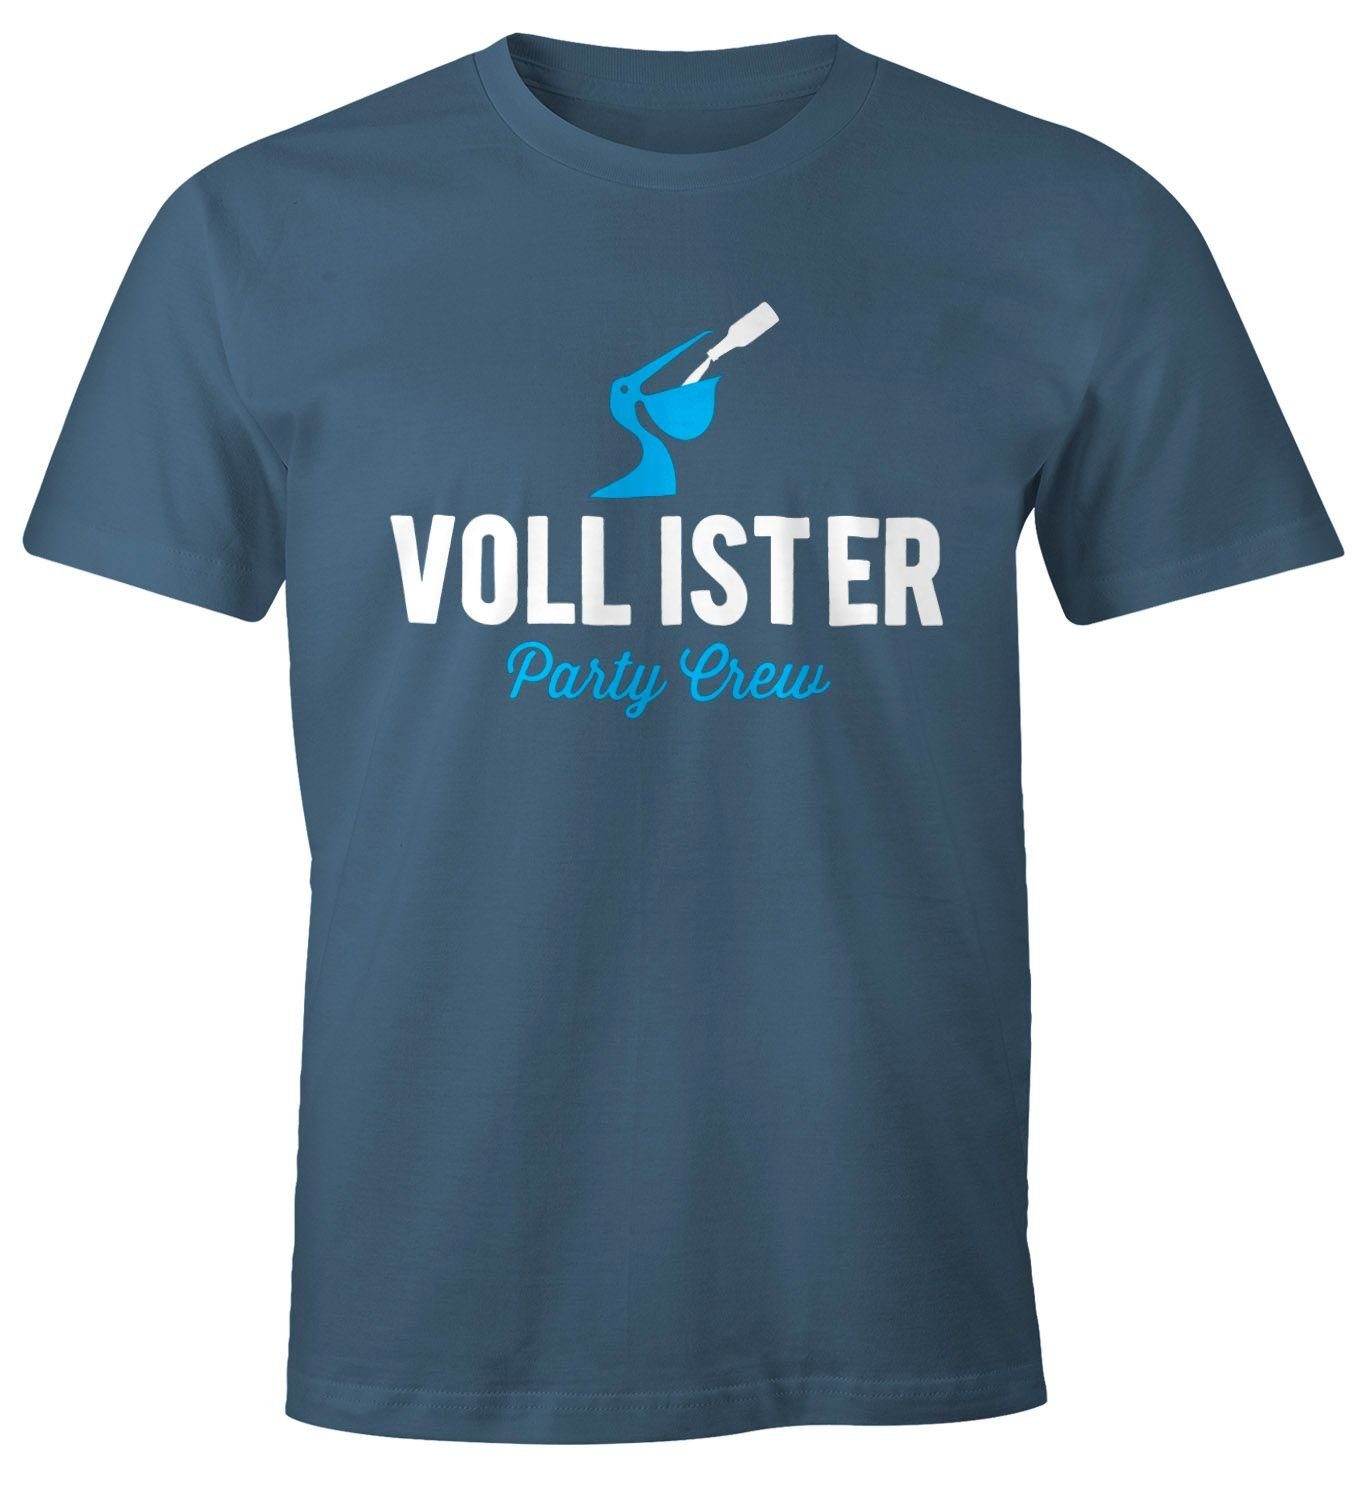 Herren T-Shirt Print Print-Shirt Bier Lustiges mit Fun-Shirt MoonWorks Moonworks® blau Vollister